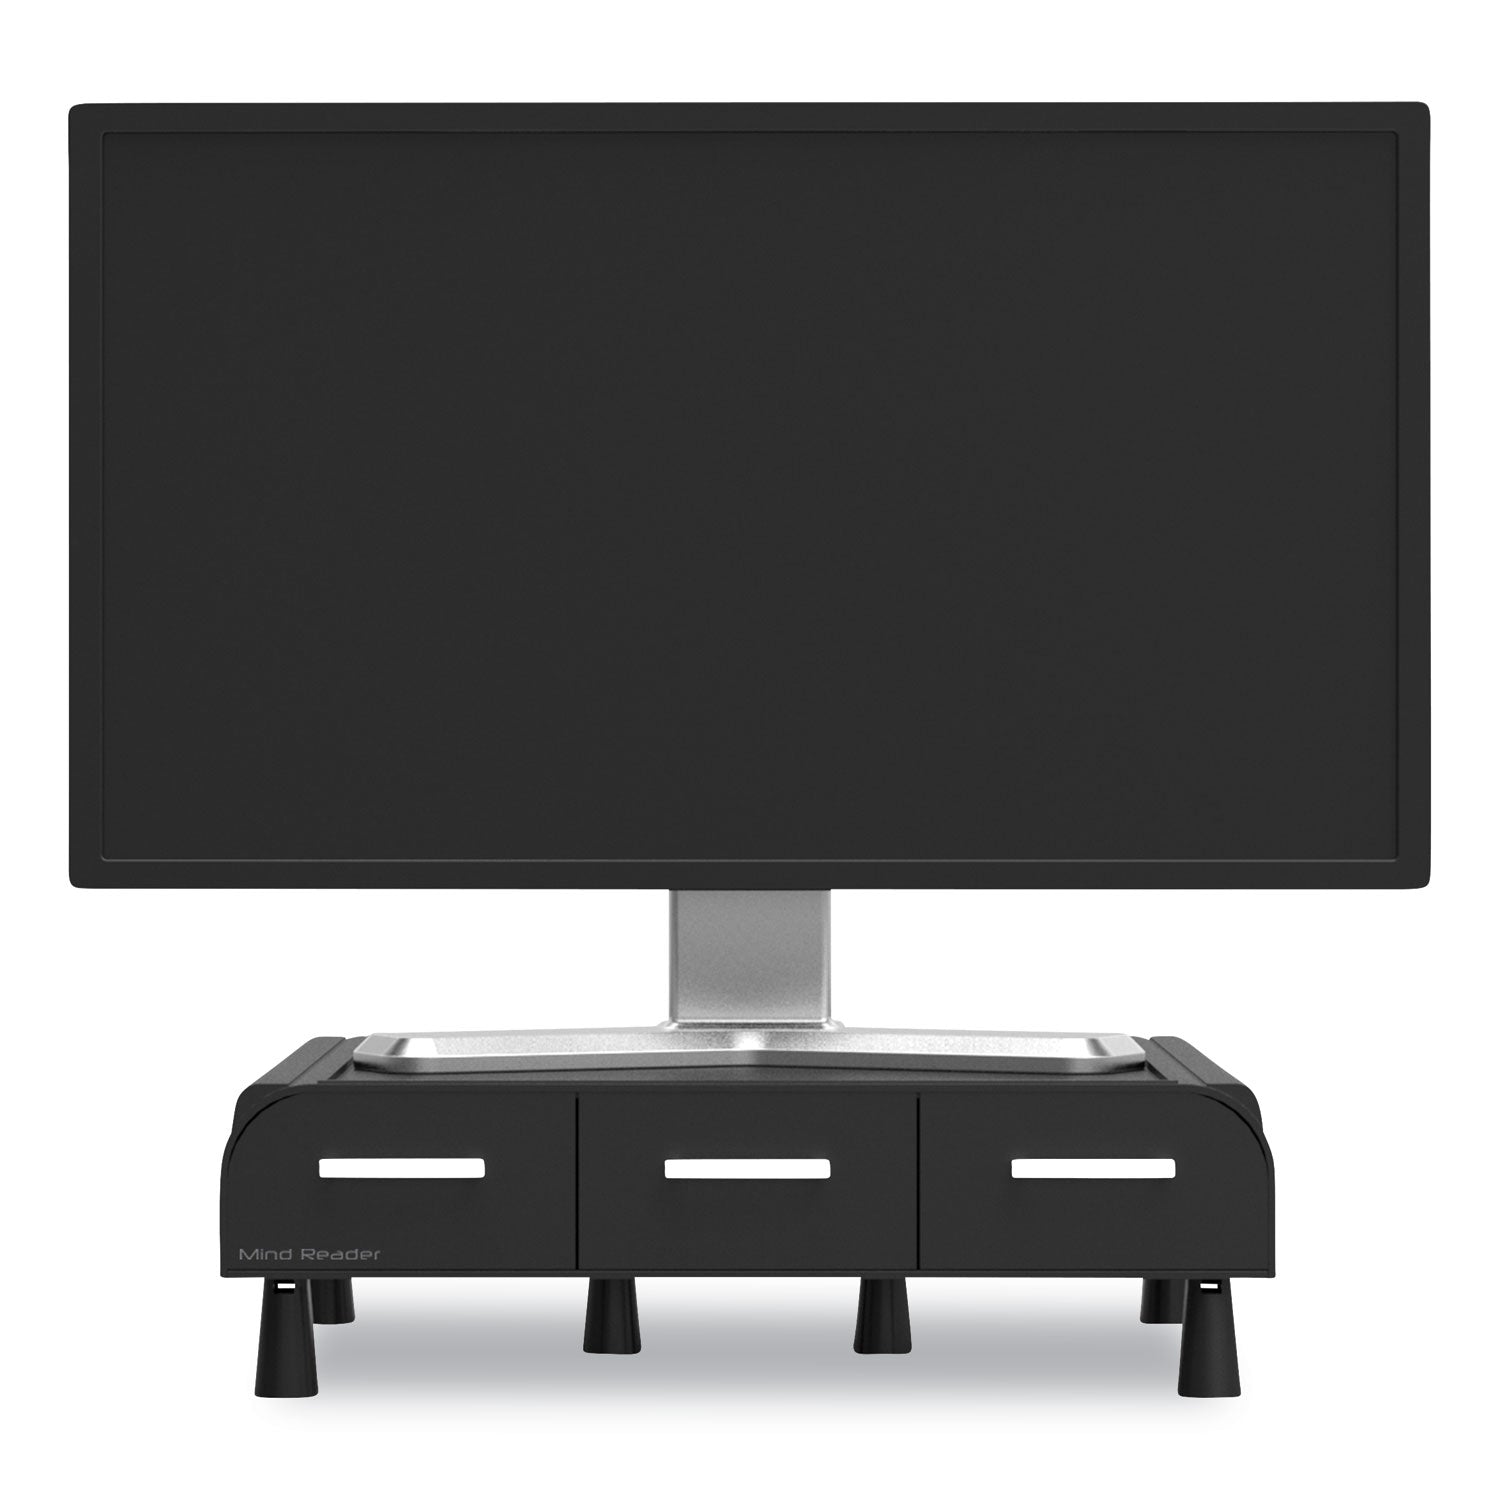 perch-monitor-stand-and-desk-organizer-1346-x-1287-x-272-black-silver_emsmonsta3dblk - 1